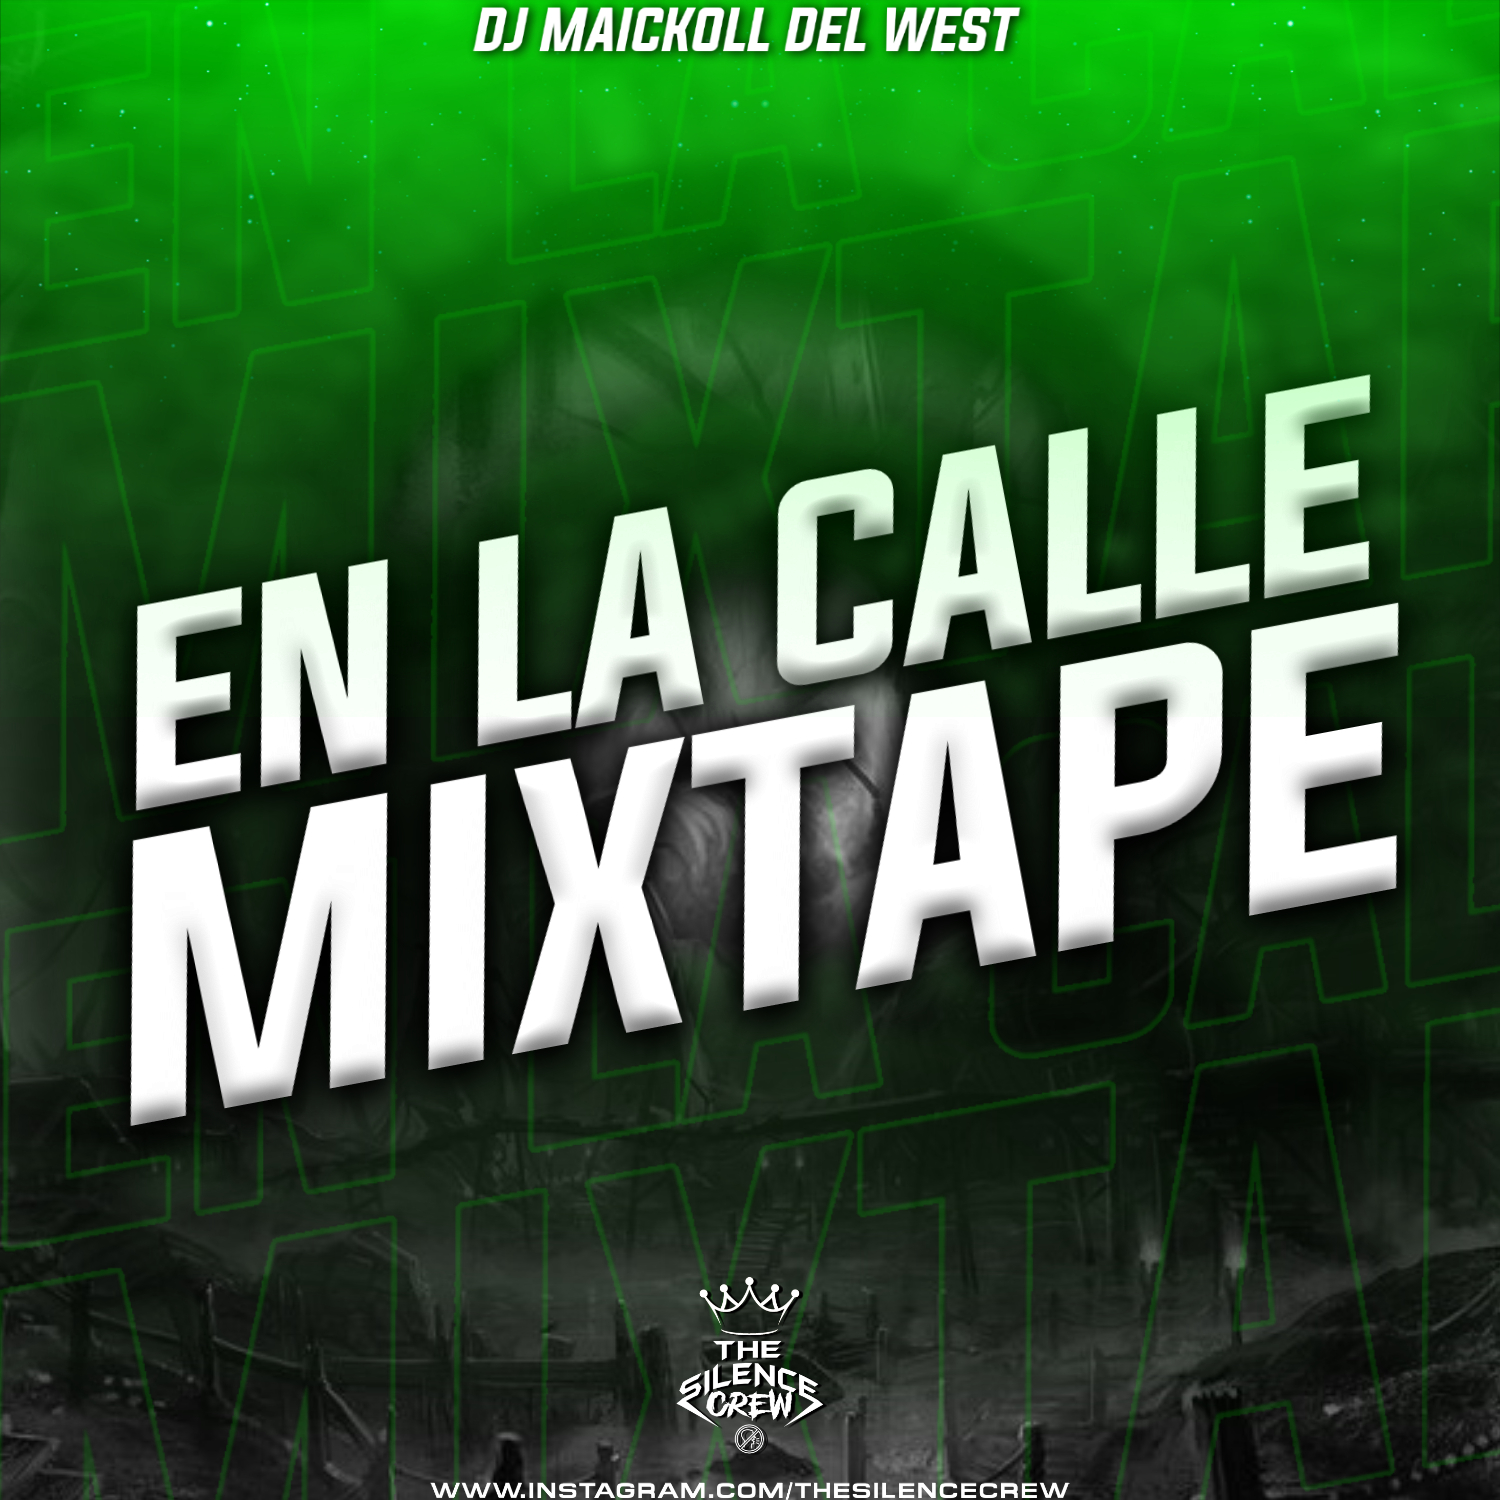 En La Calle Mix Tape By @Dj_del_west @dj_maickoll_del_west